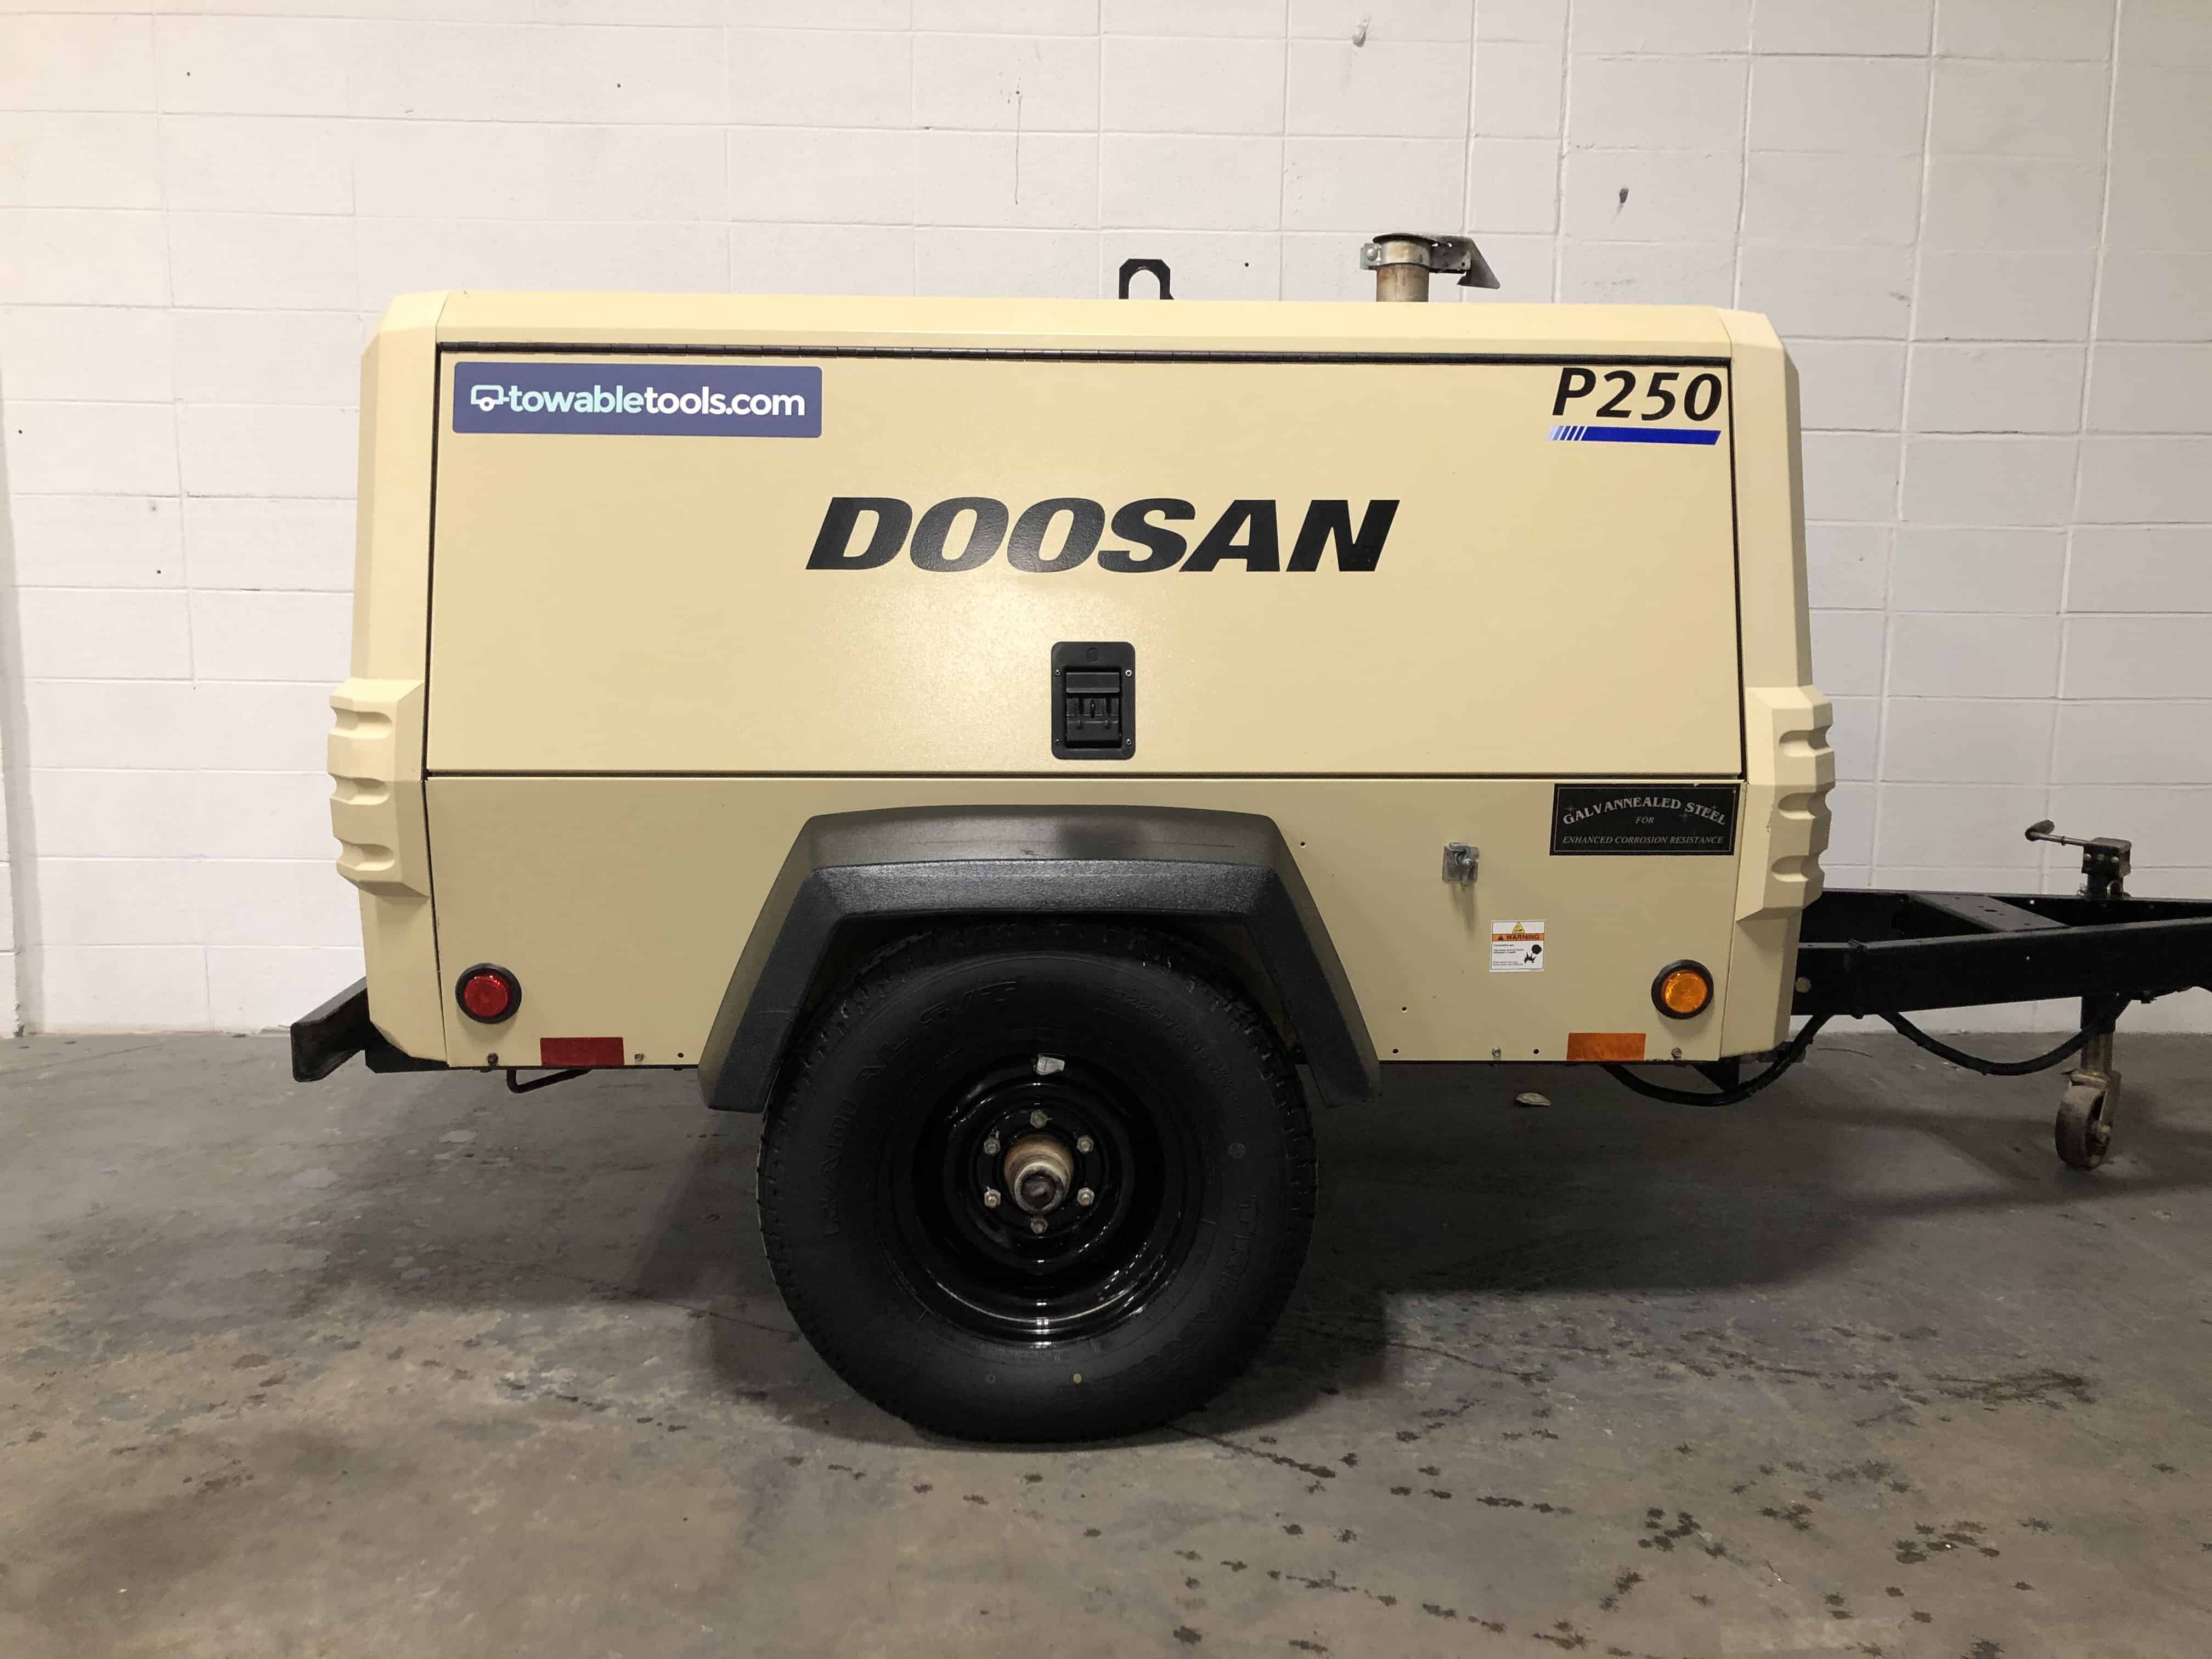 Doosan P250 Air Compressor For Sale Used 2014 Diesel - Towable Tools